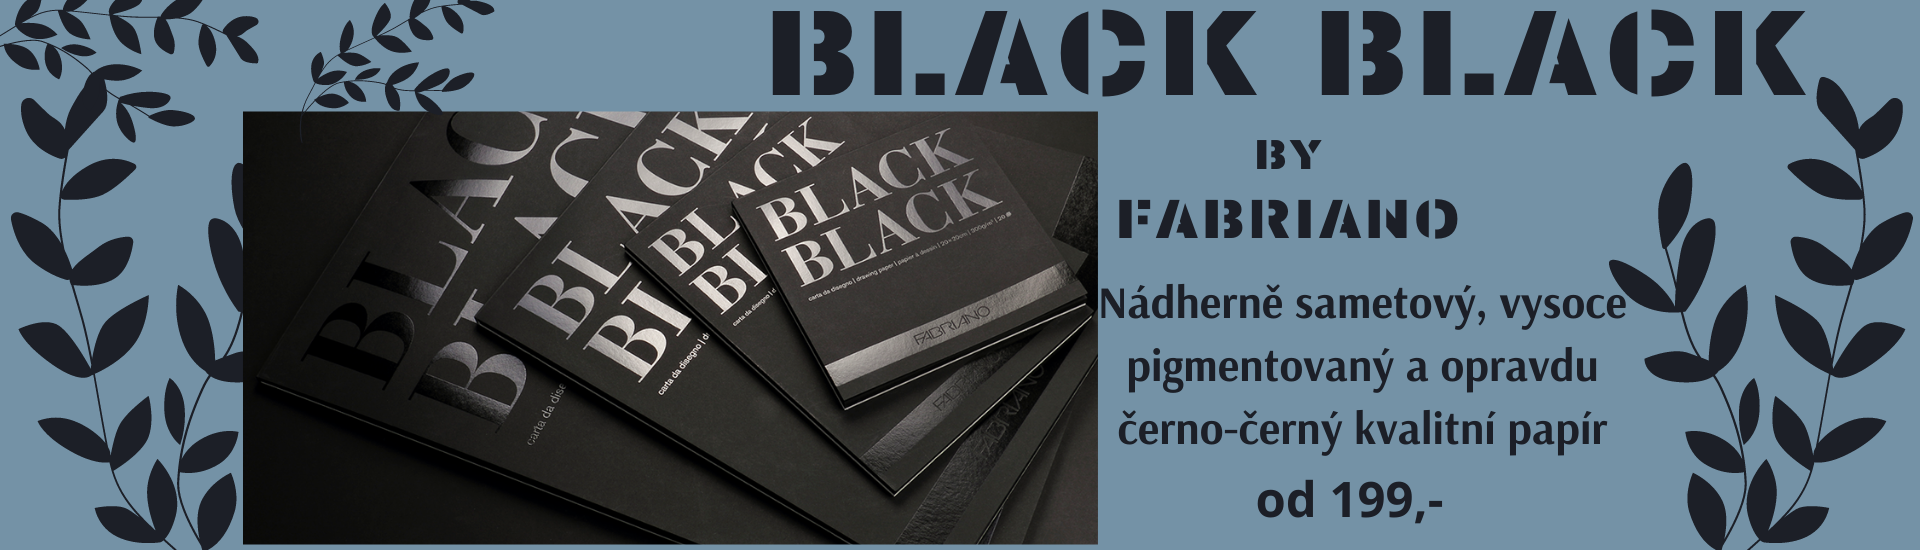 black black